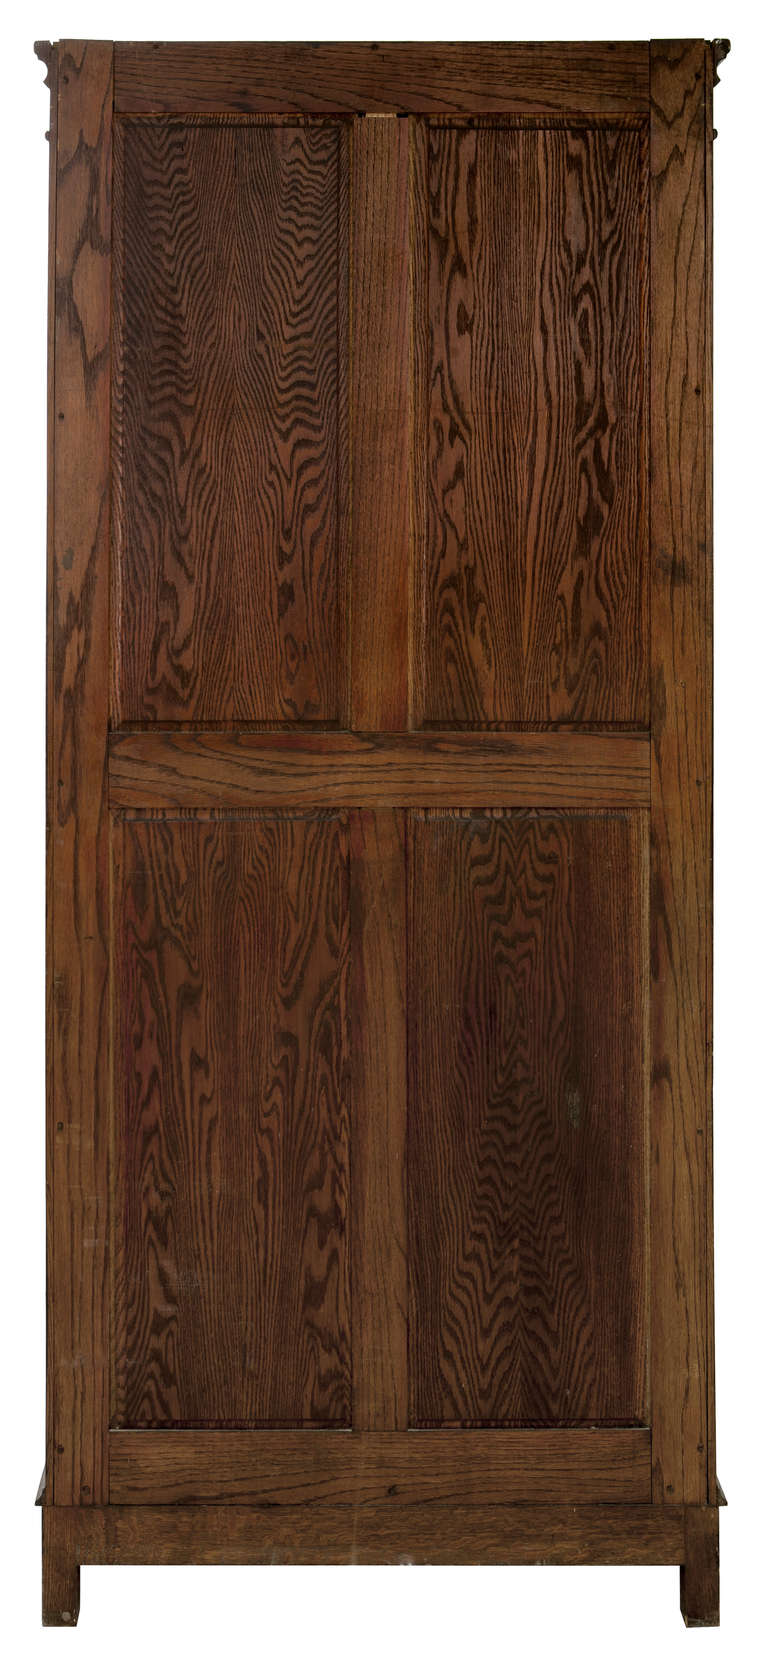 British Jacobean Revival Style Oak Wardrobe